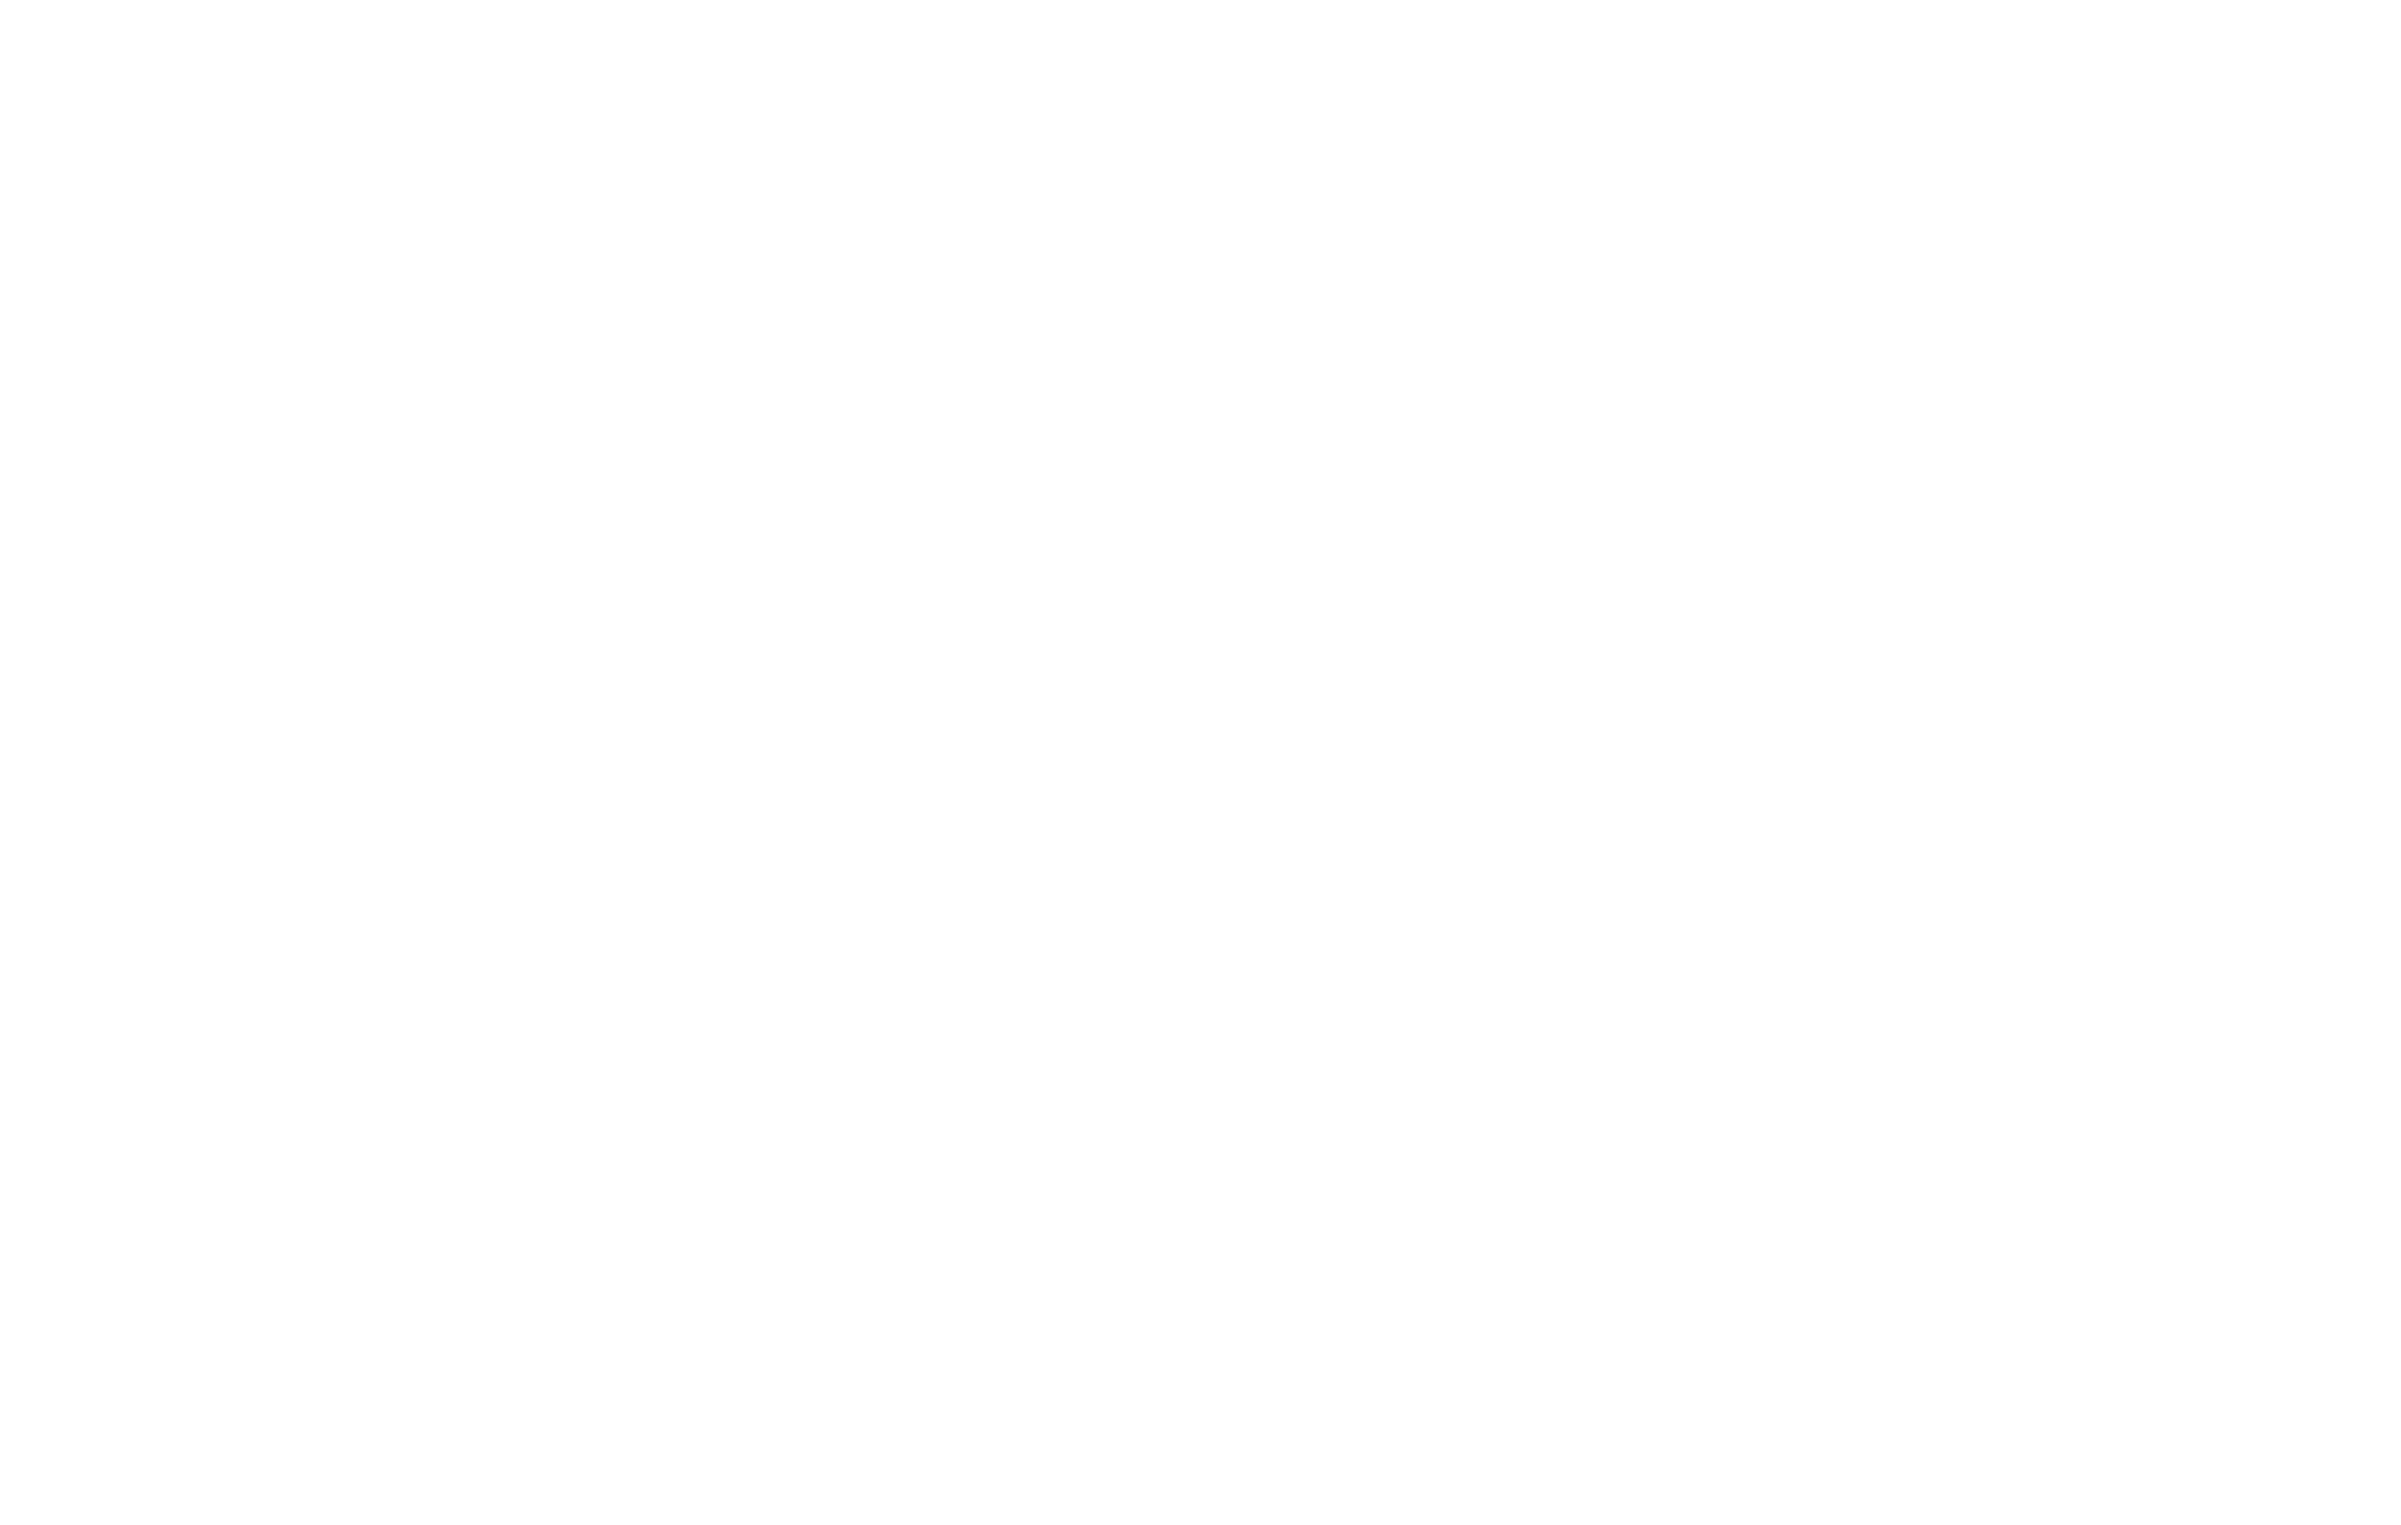 Clayton Jackson McGhie Memorial, Inc.